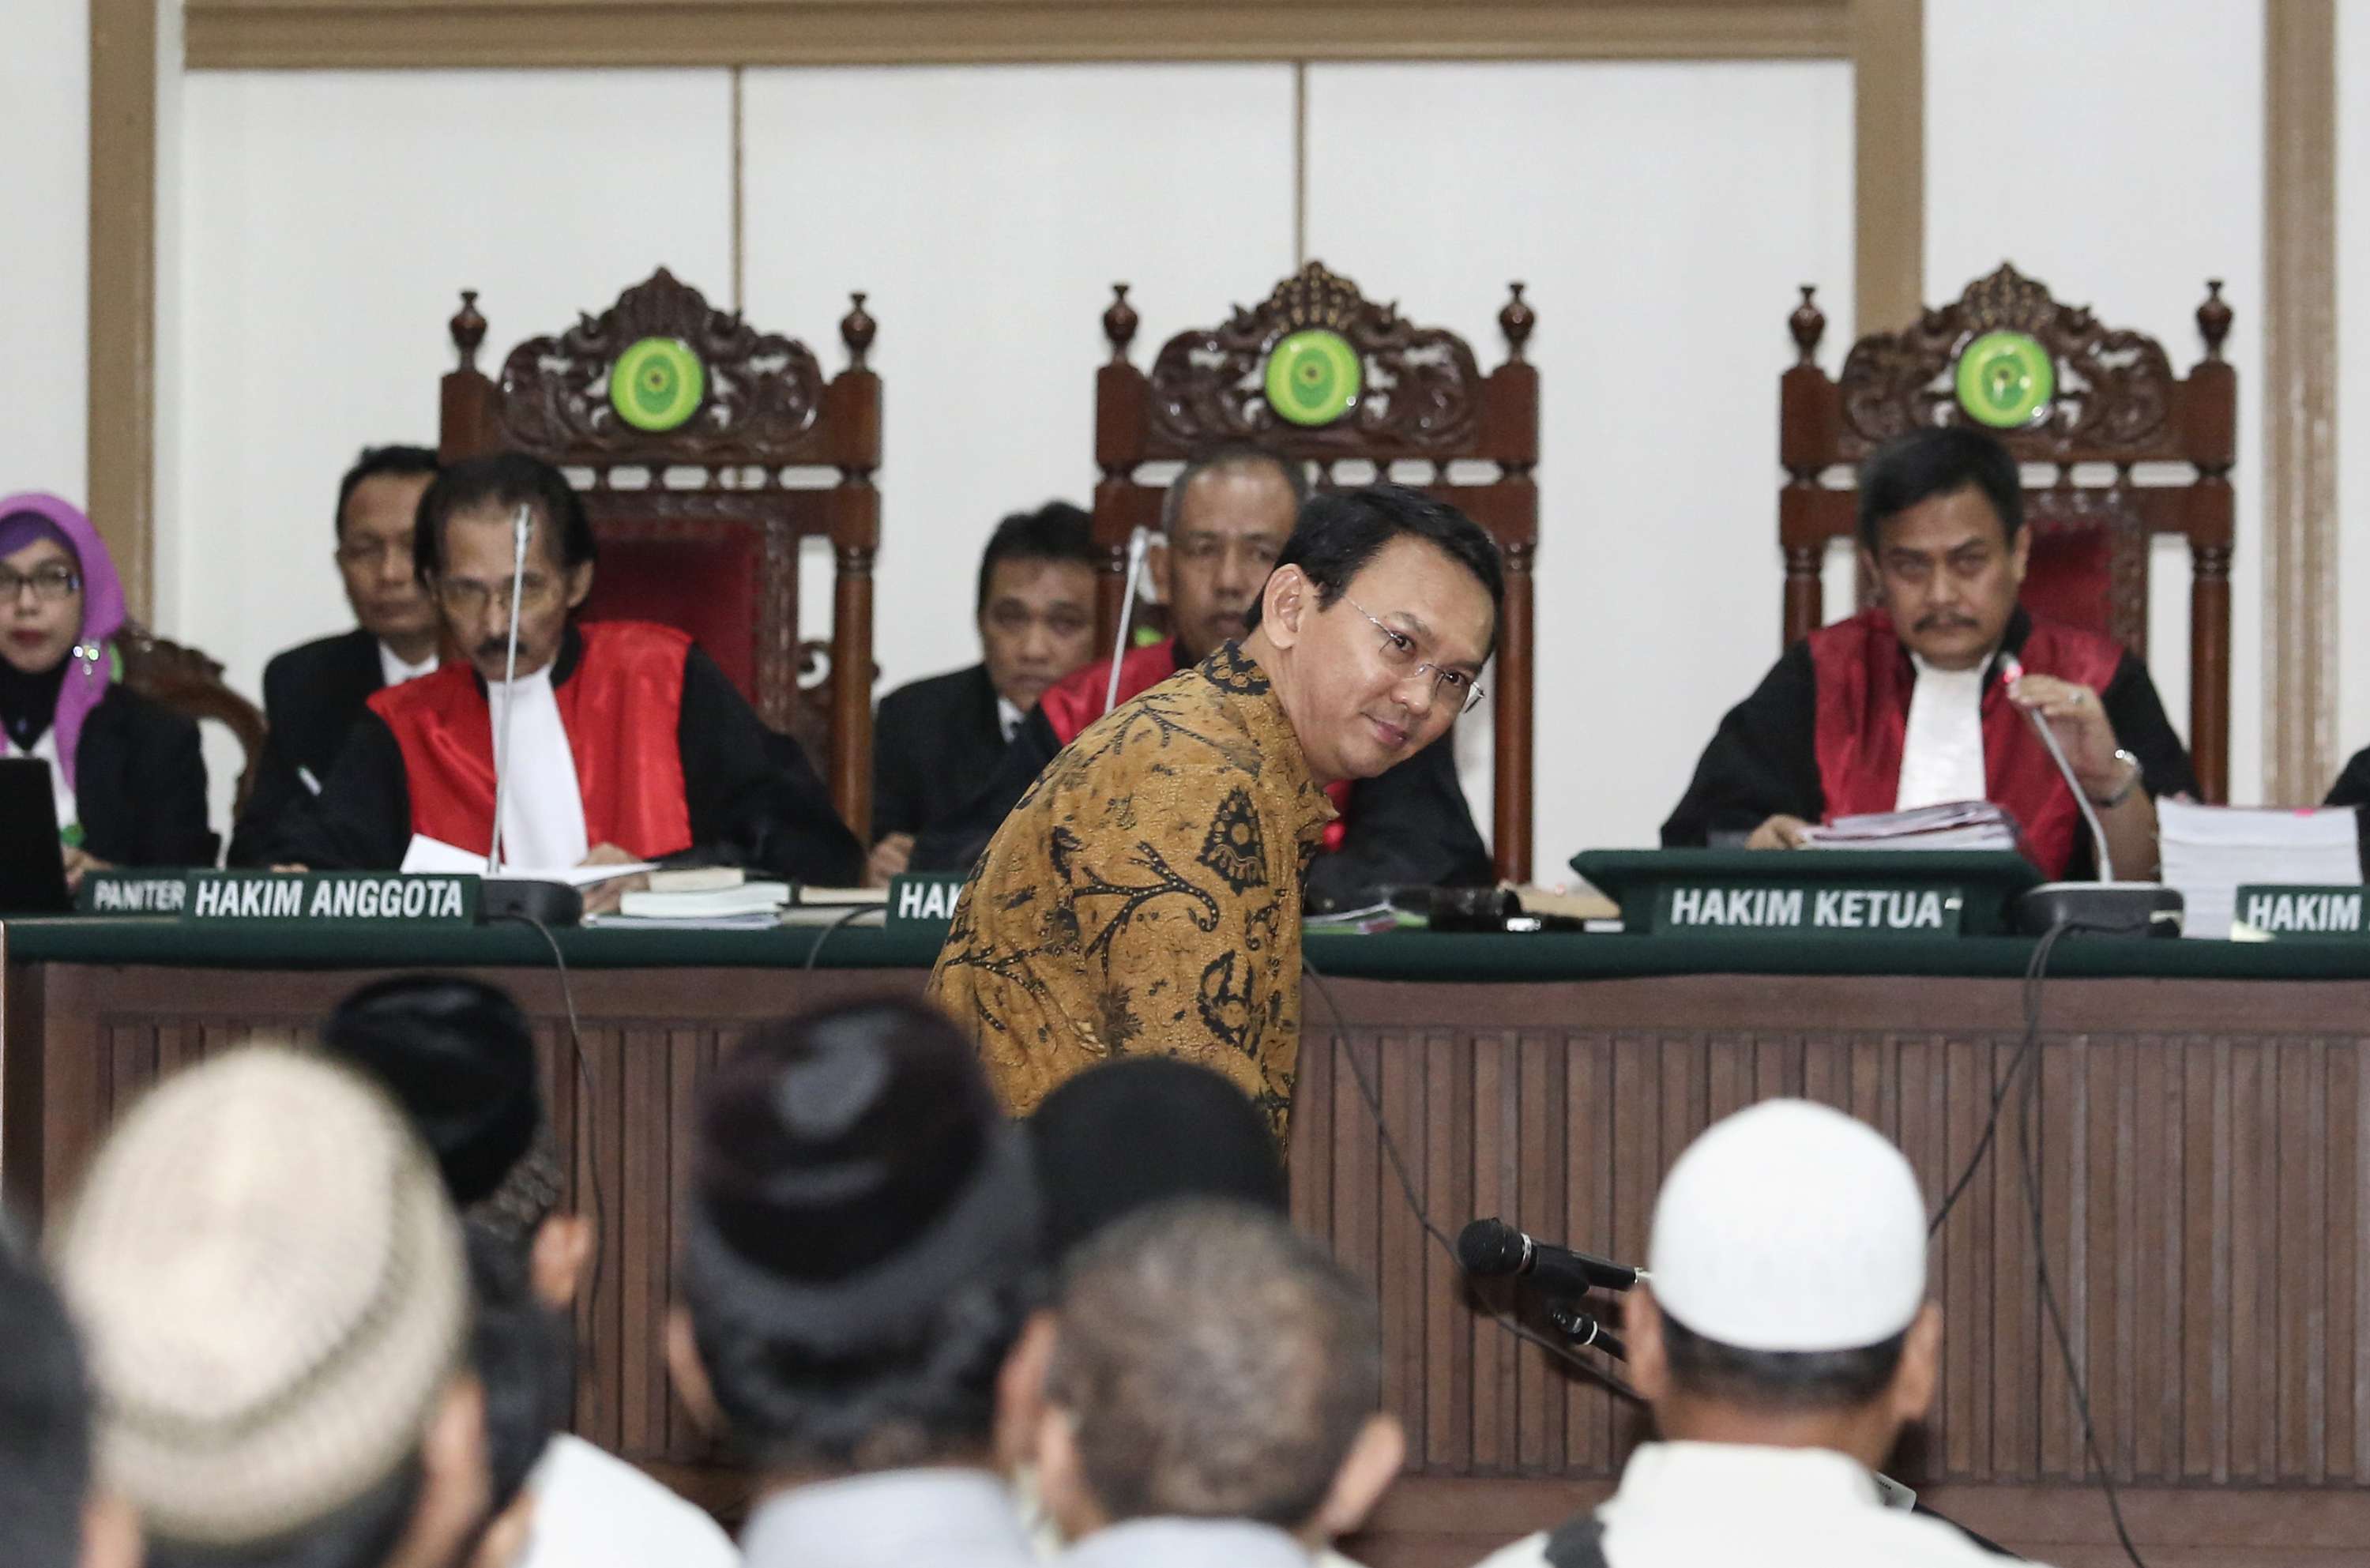 Jakarta’s Christian governor Basuki Tjahaja Purnama is on trial for blasphemy. Photo: AFP